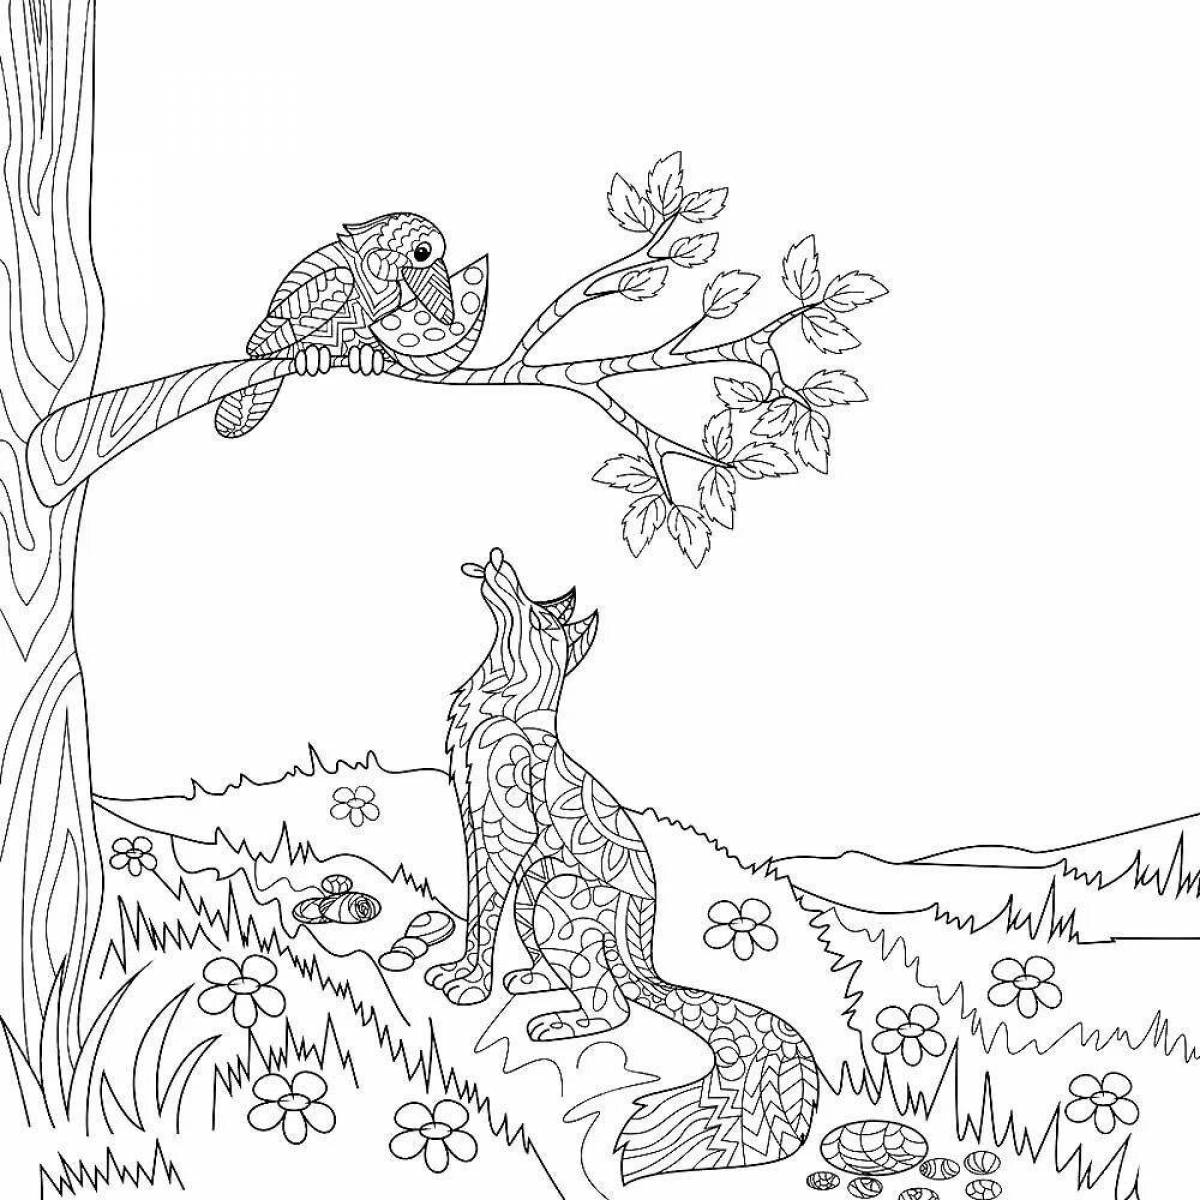 Coloring page joyful fox and crow